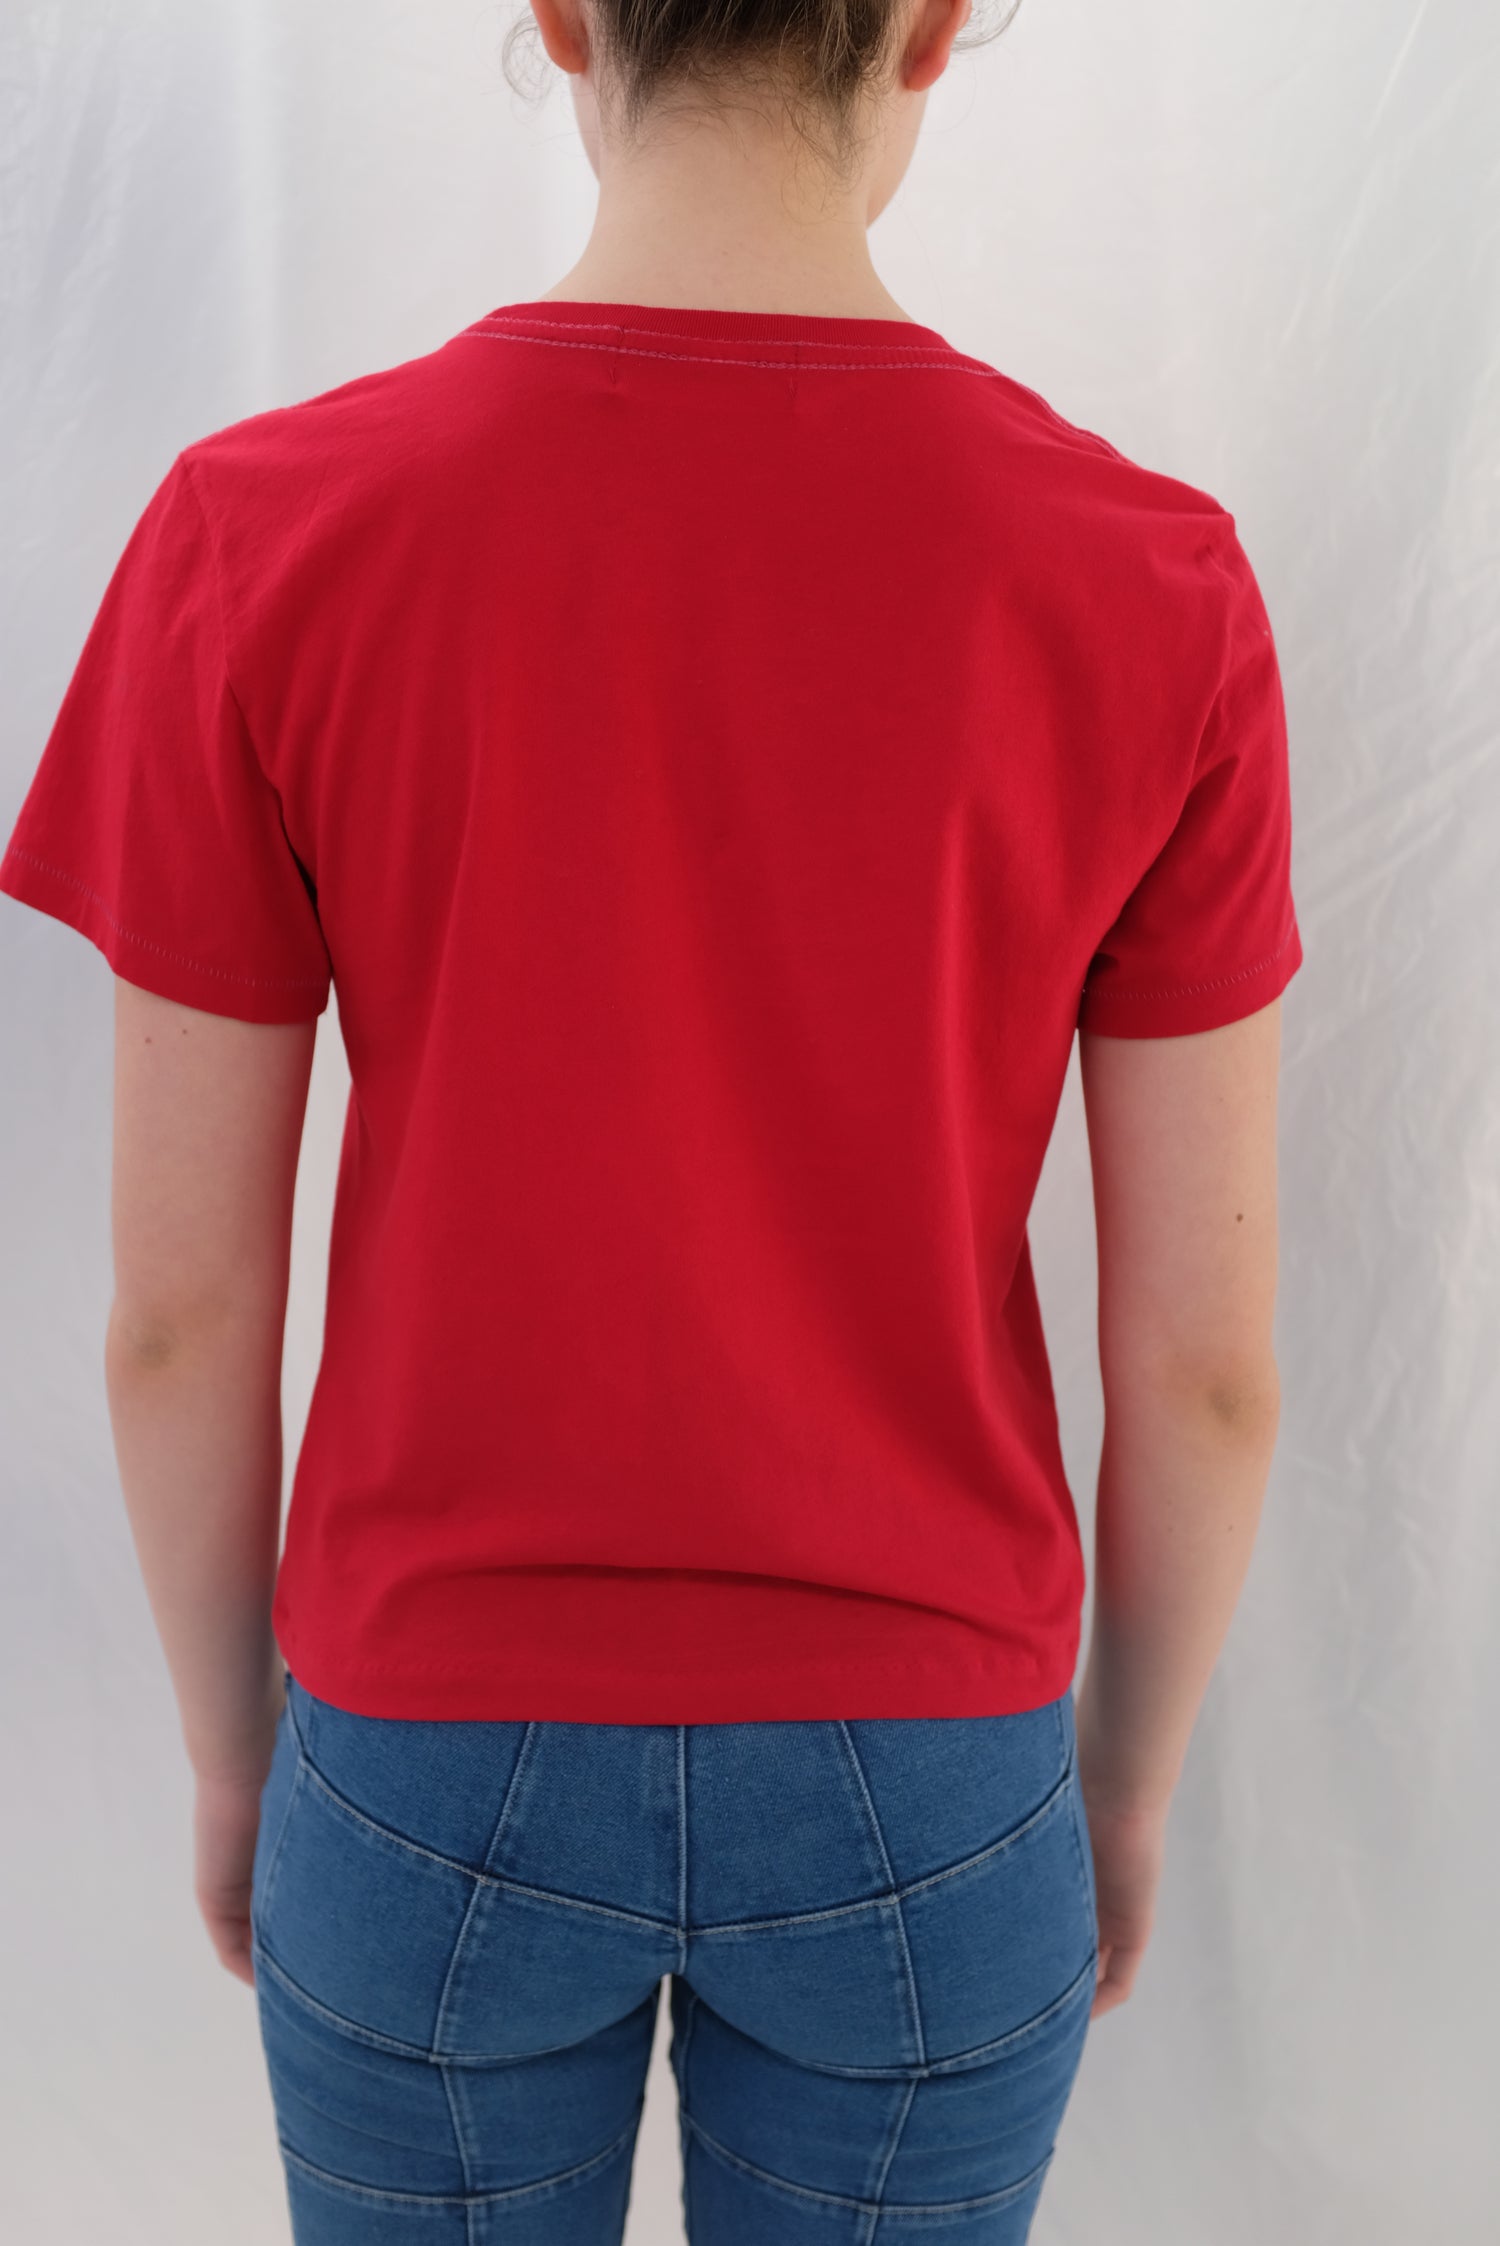 Correll Correll Velvet Circle T Shirt Red